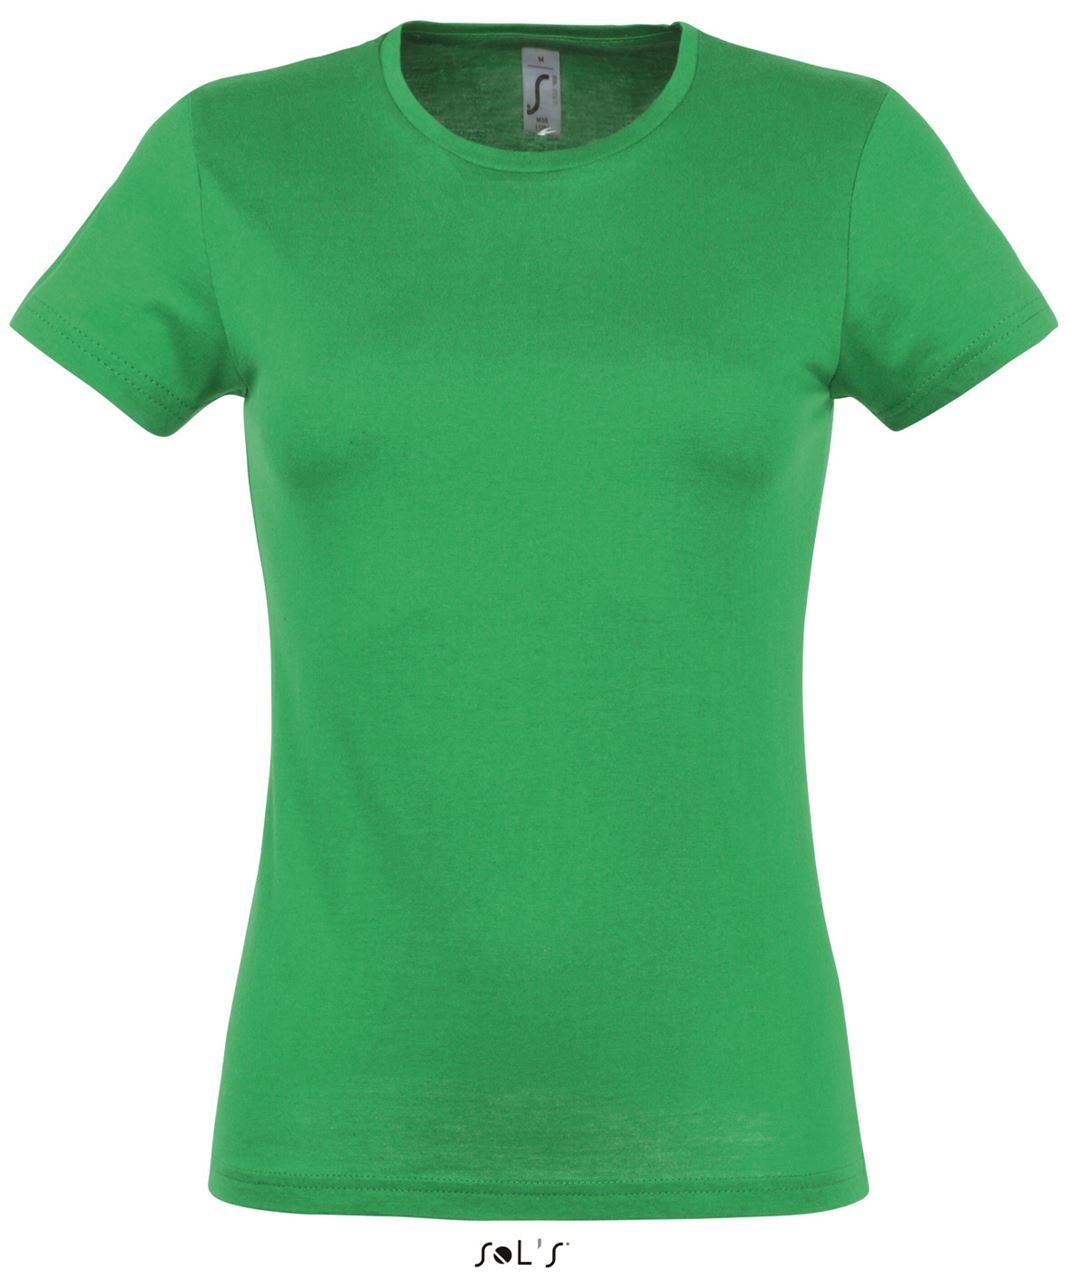 Tricou pentru femei, Diferite culori/marimi B410